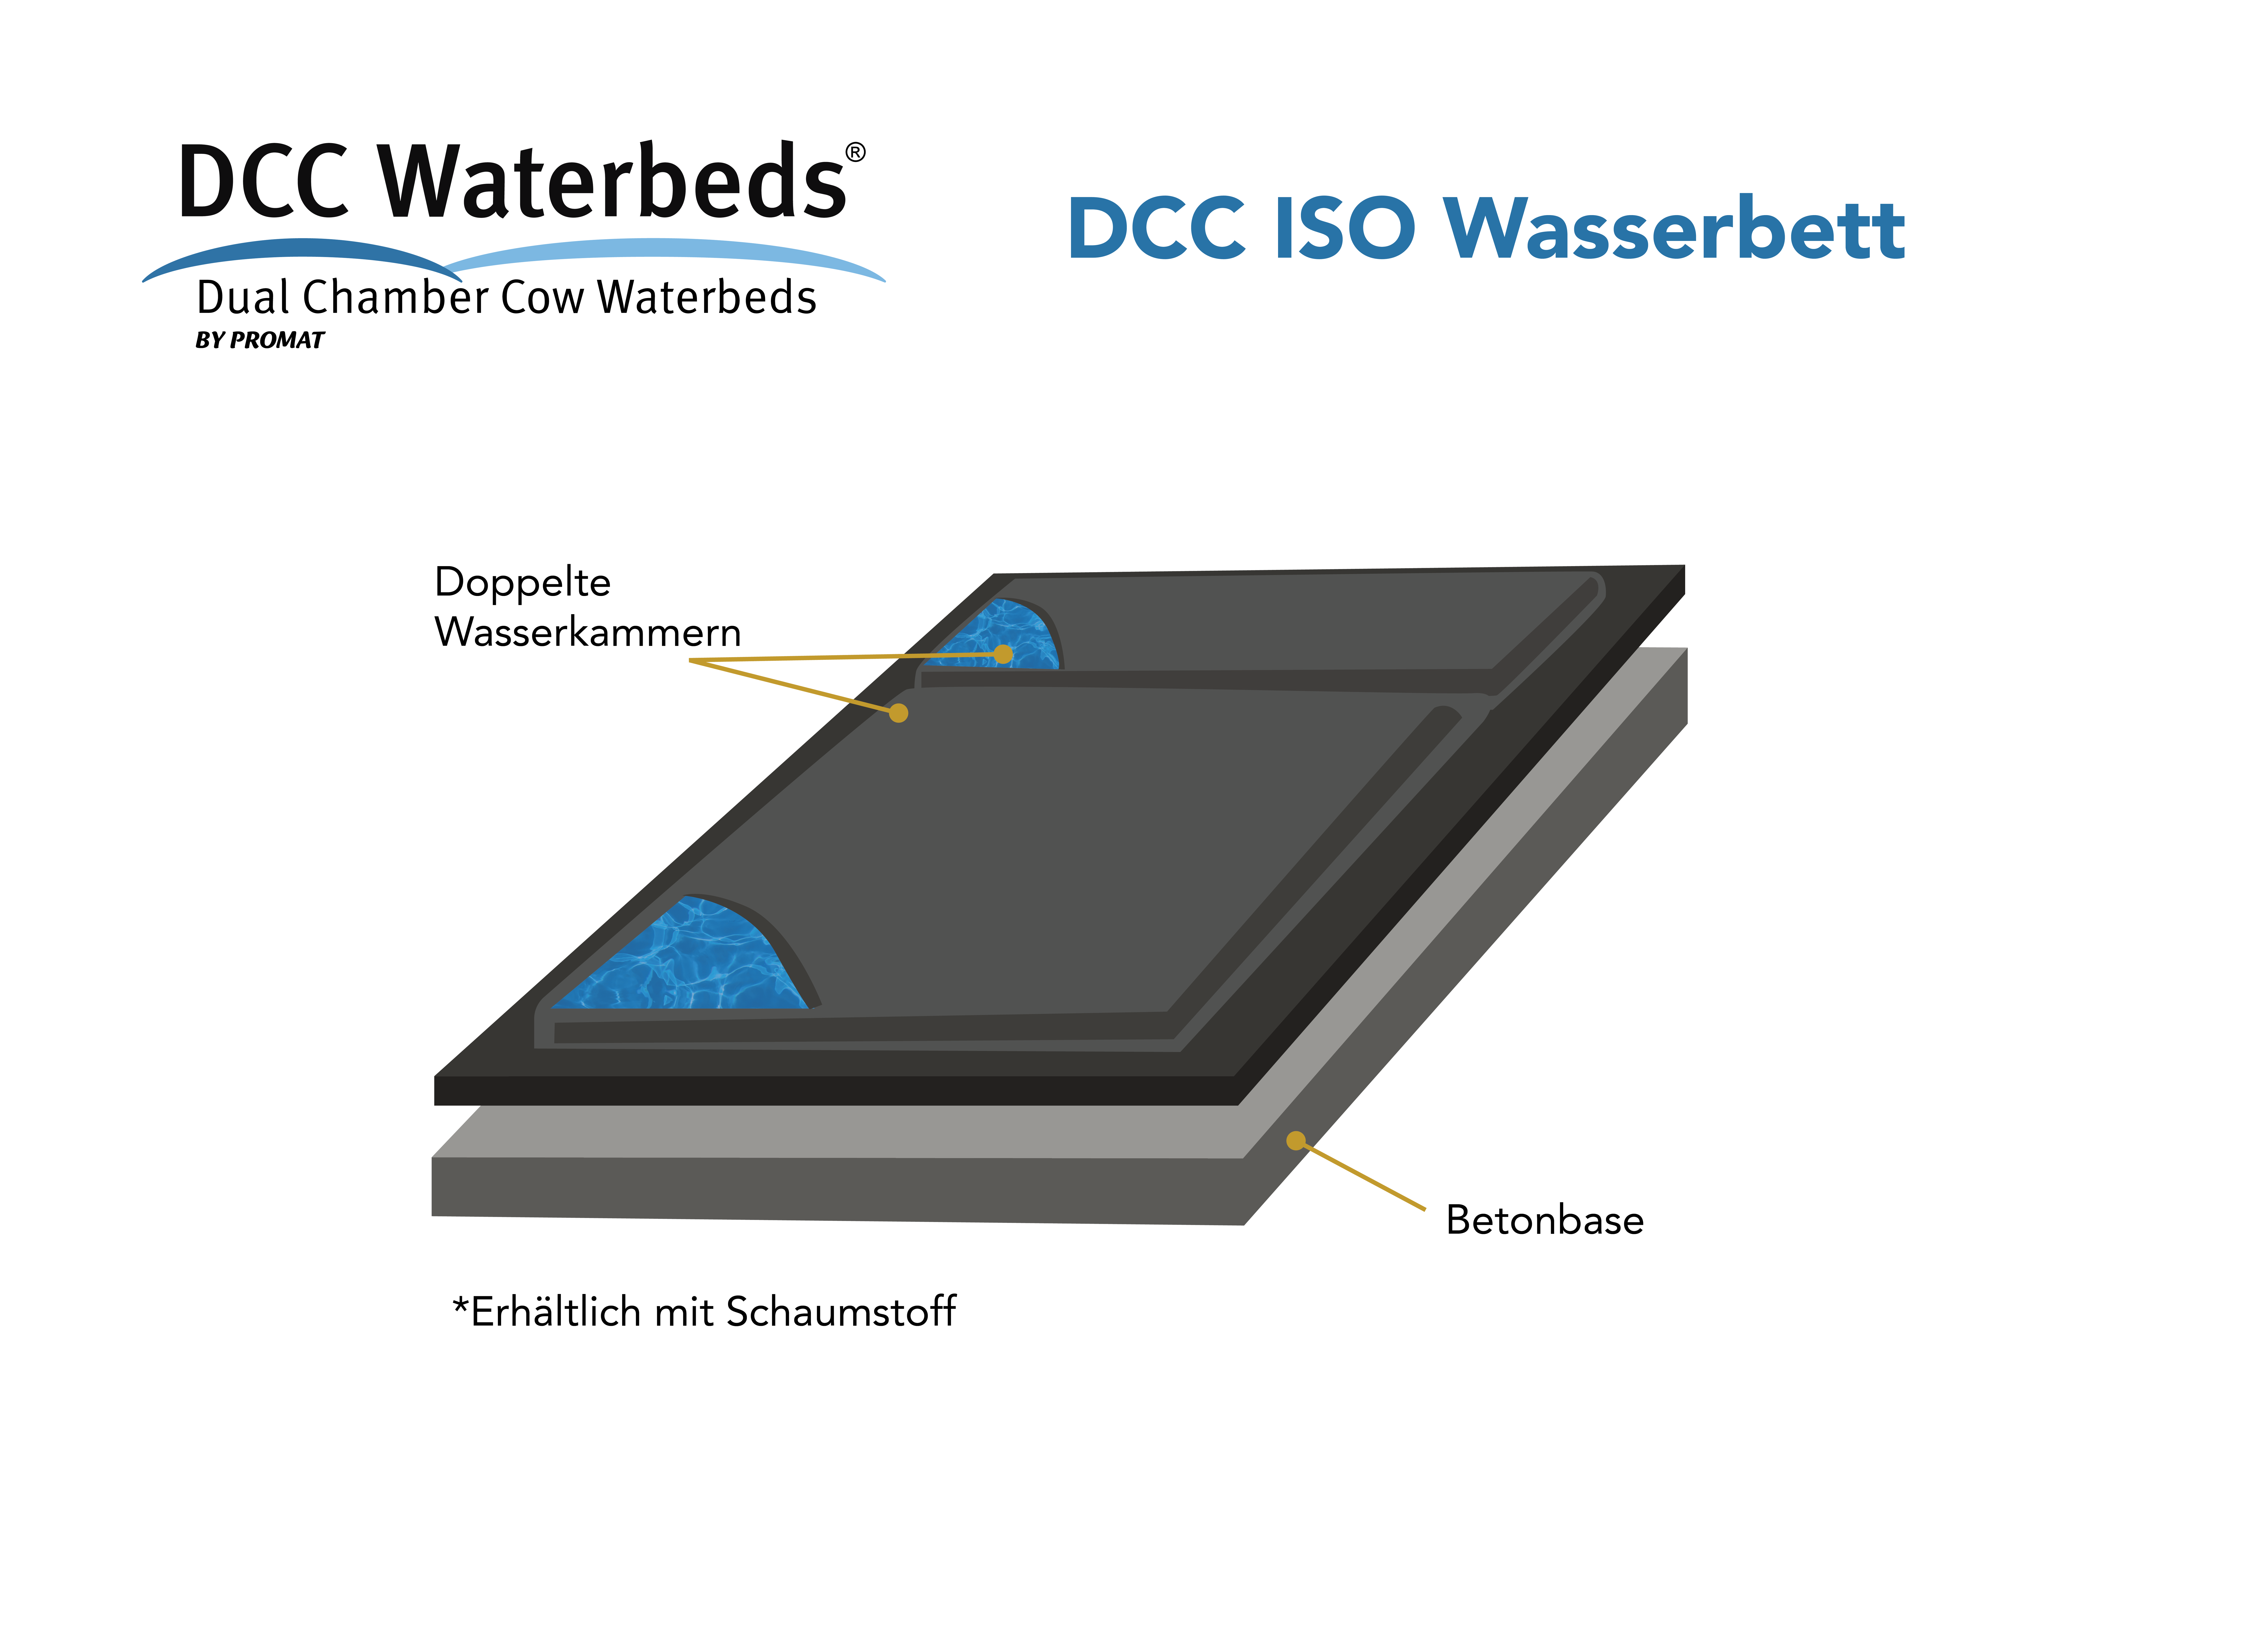 DCC ISO Wasserbett